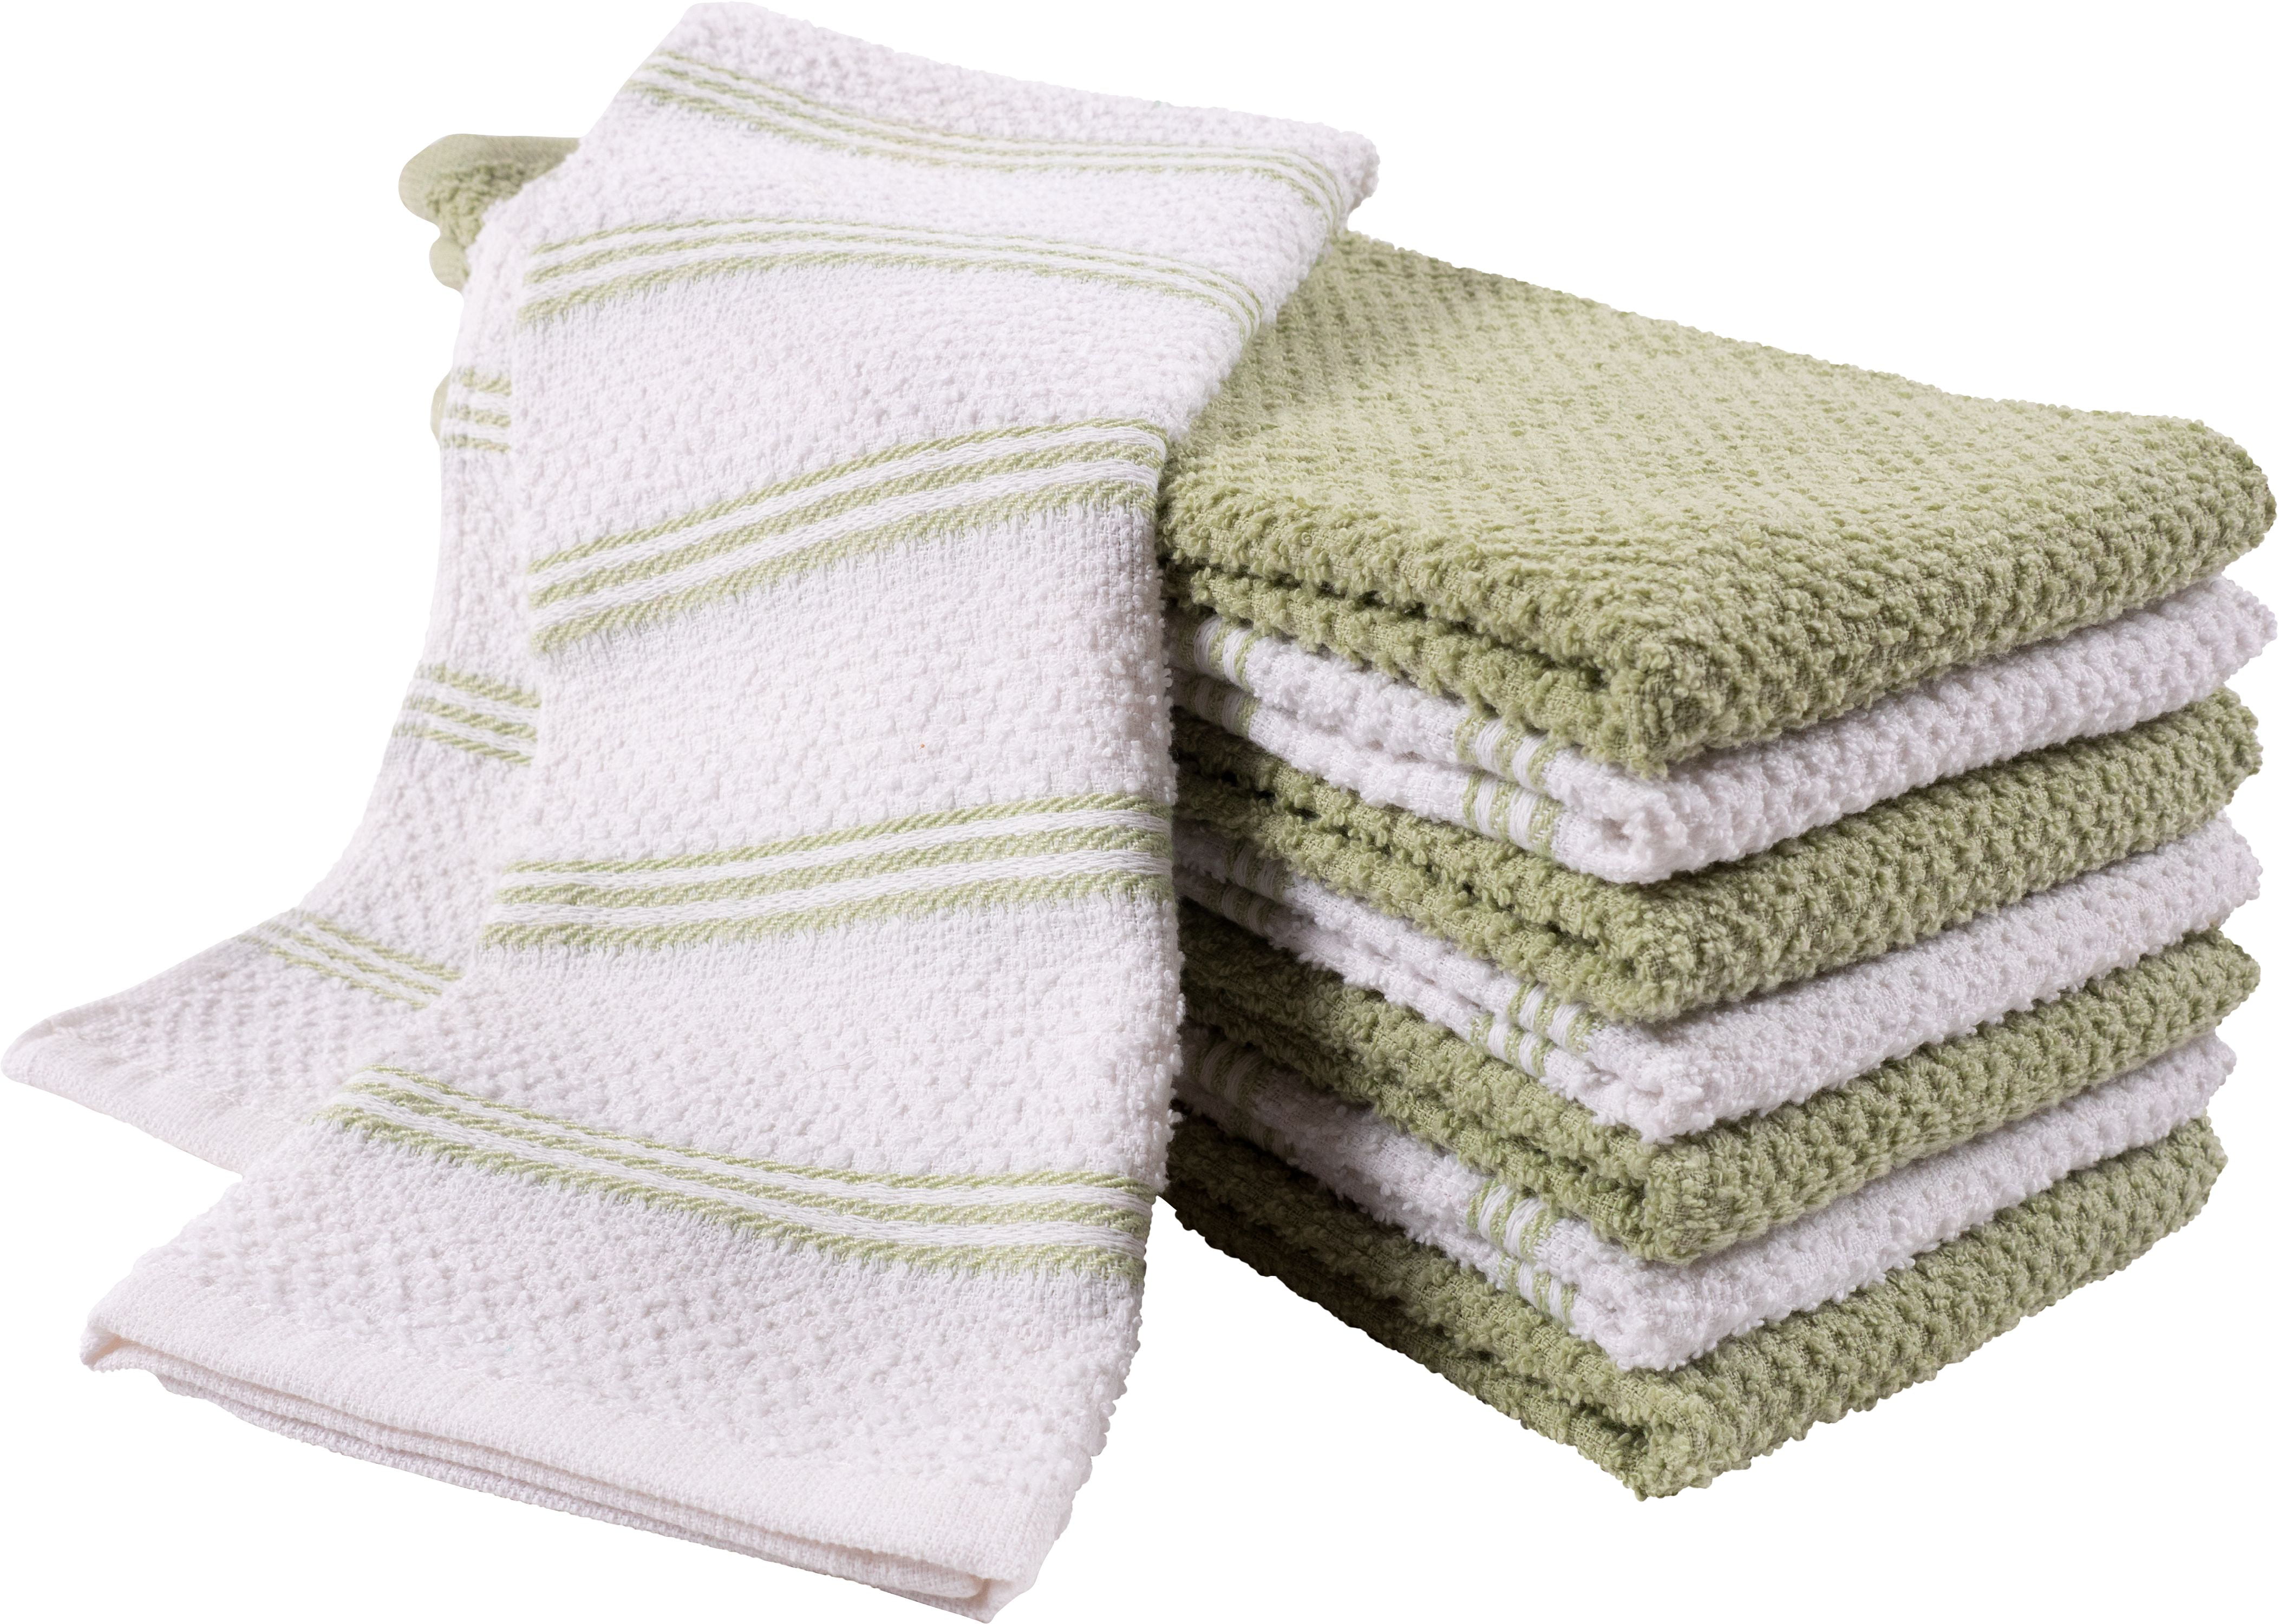  QUILTINA 100% Cotton Absorbent Kitchen Dish Towels Set